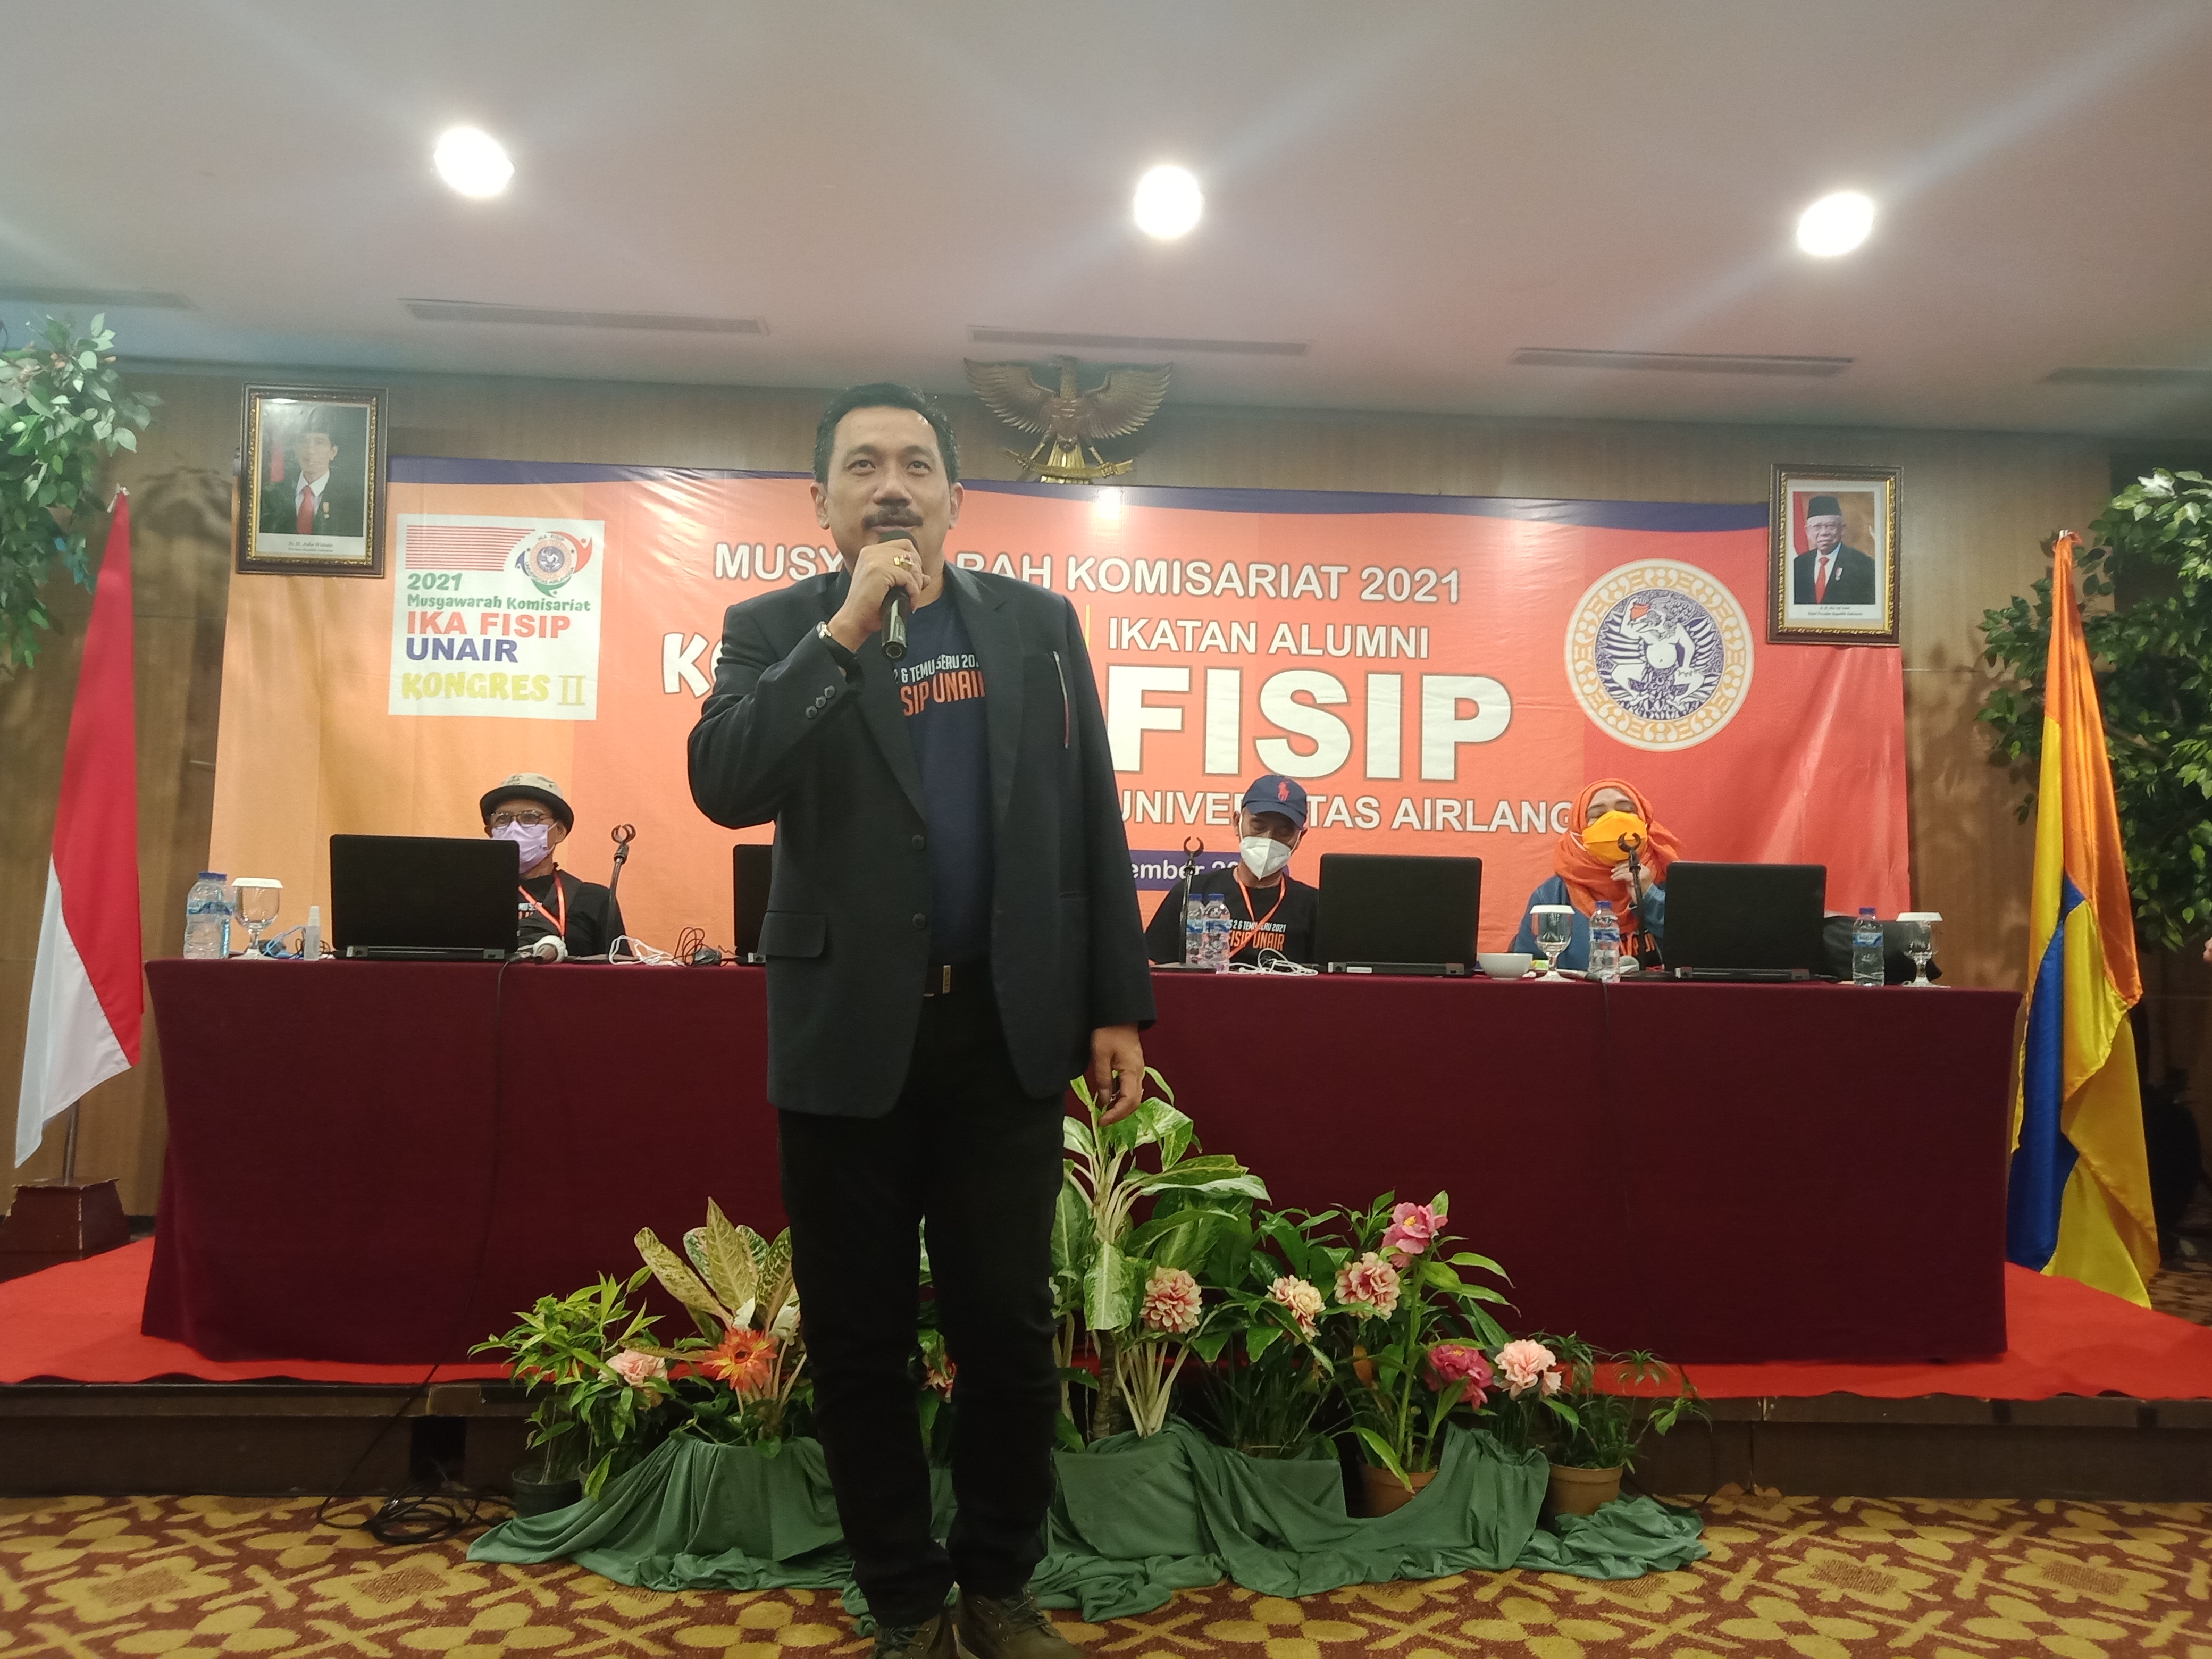 Dr. Andik Fadjar Tjahjono, Drs., M.Si., saat menyampaikan sambutan seusai terpilih sebagai Ketua Umum IKA FISIP Unair